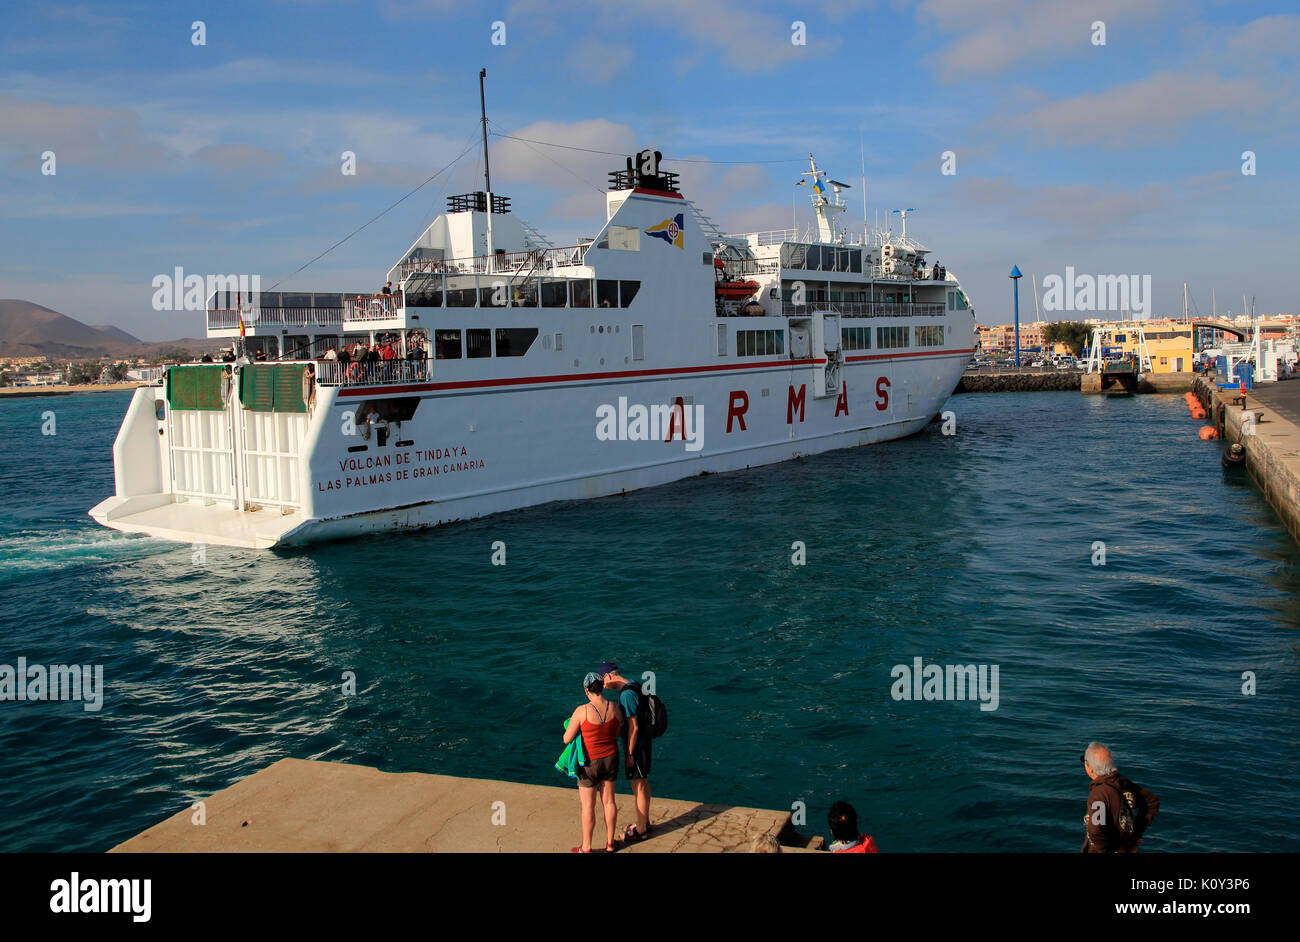 Armas ferry ship 'Volcan de Tindaya' arriving at quayside, Corralejo,  Fuerteventura, Canary Islands, Spain Stock Photo - Alamy